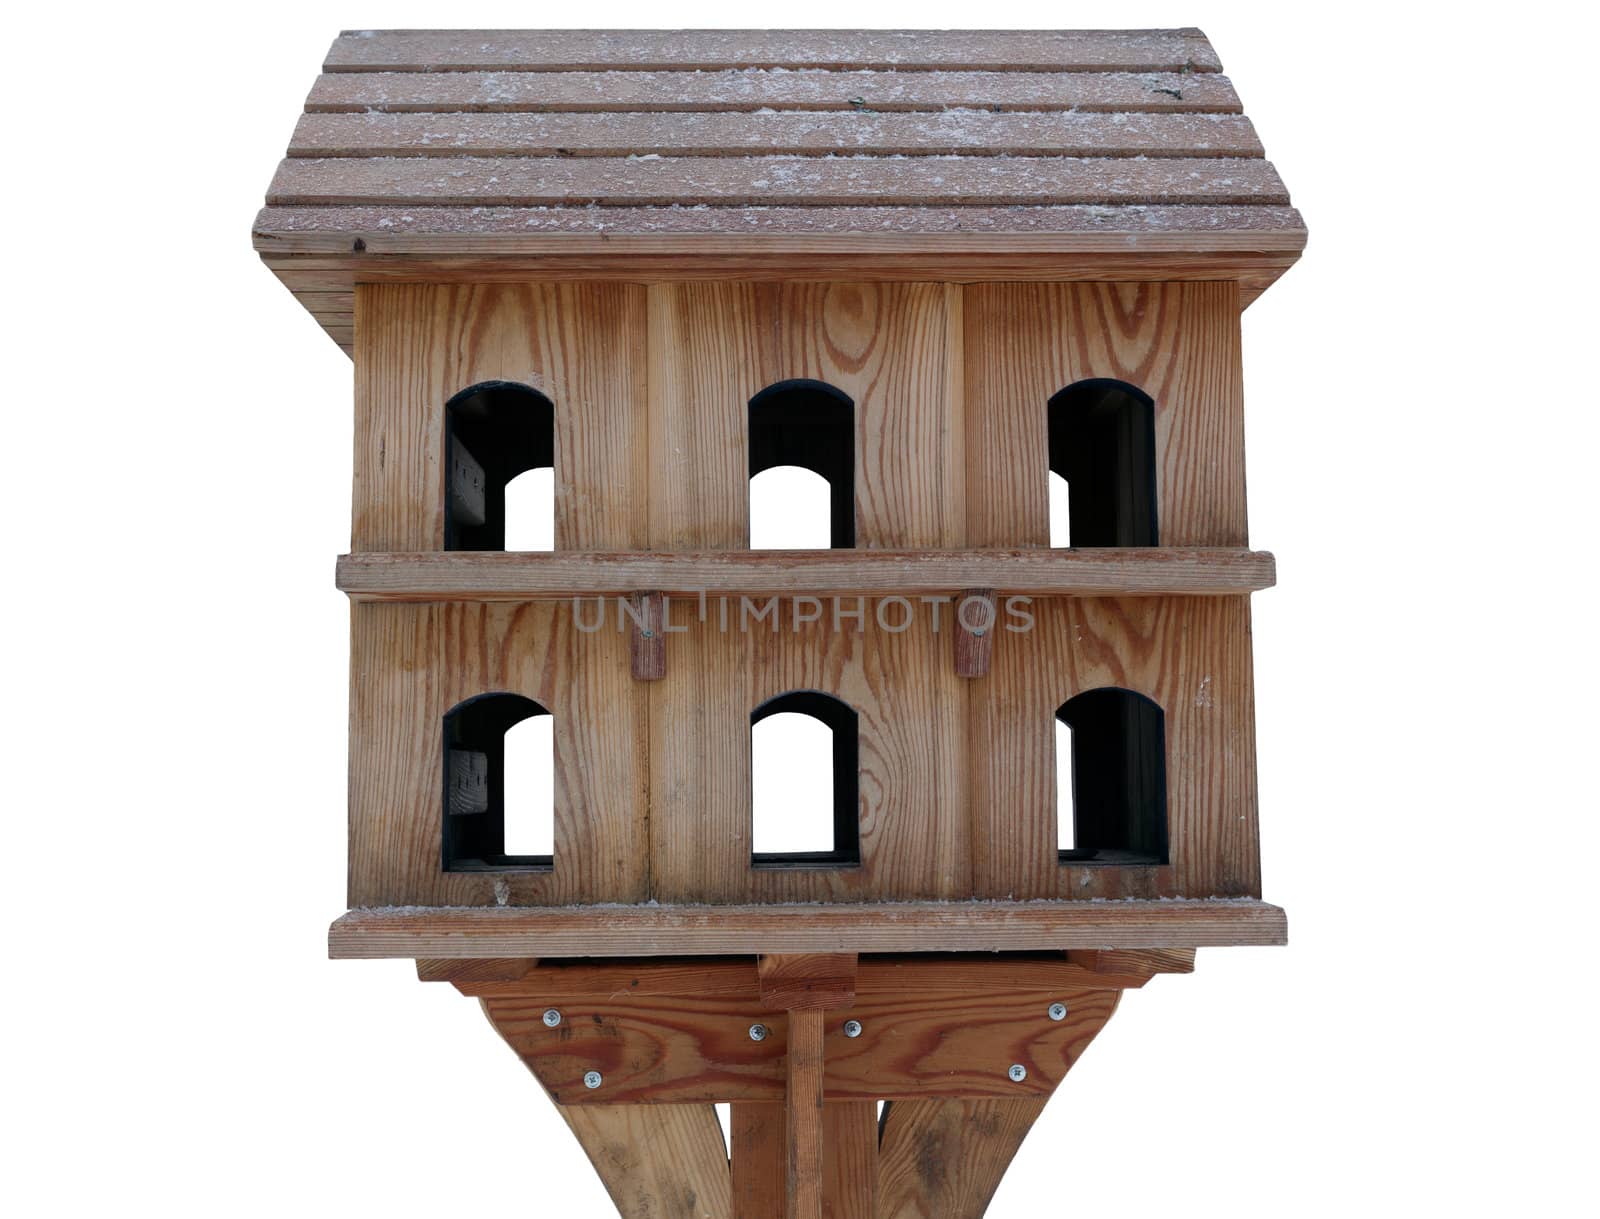 Wooden bird feeders. Isolate